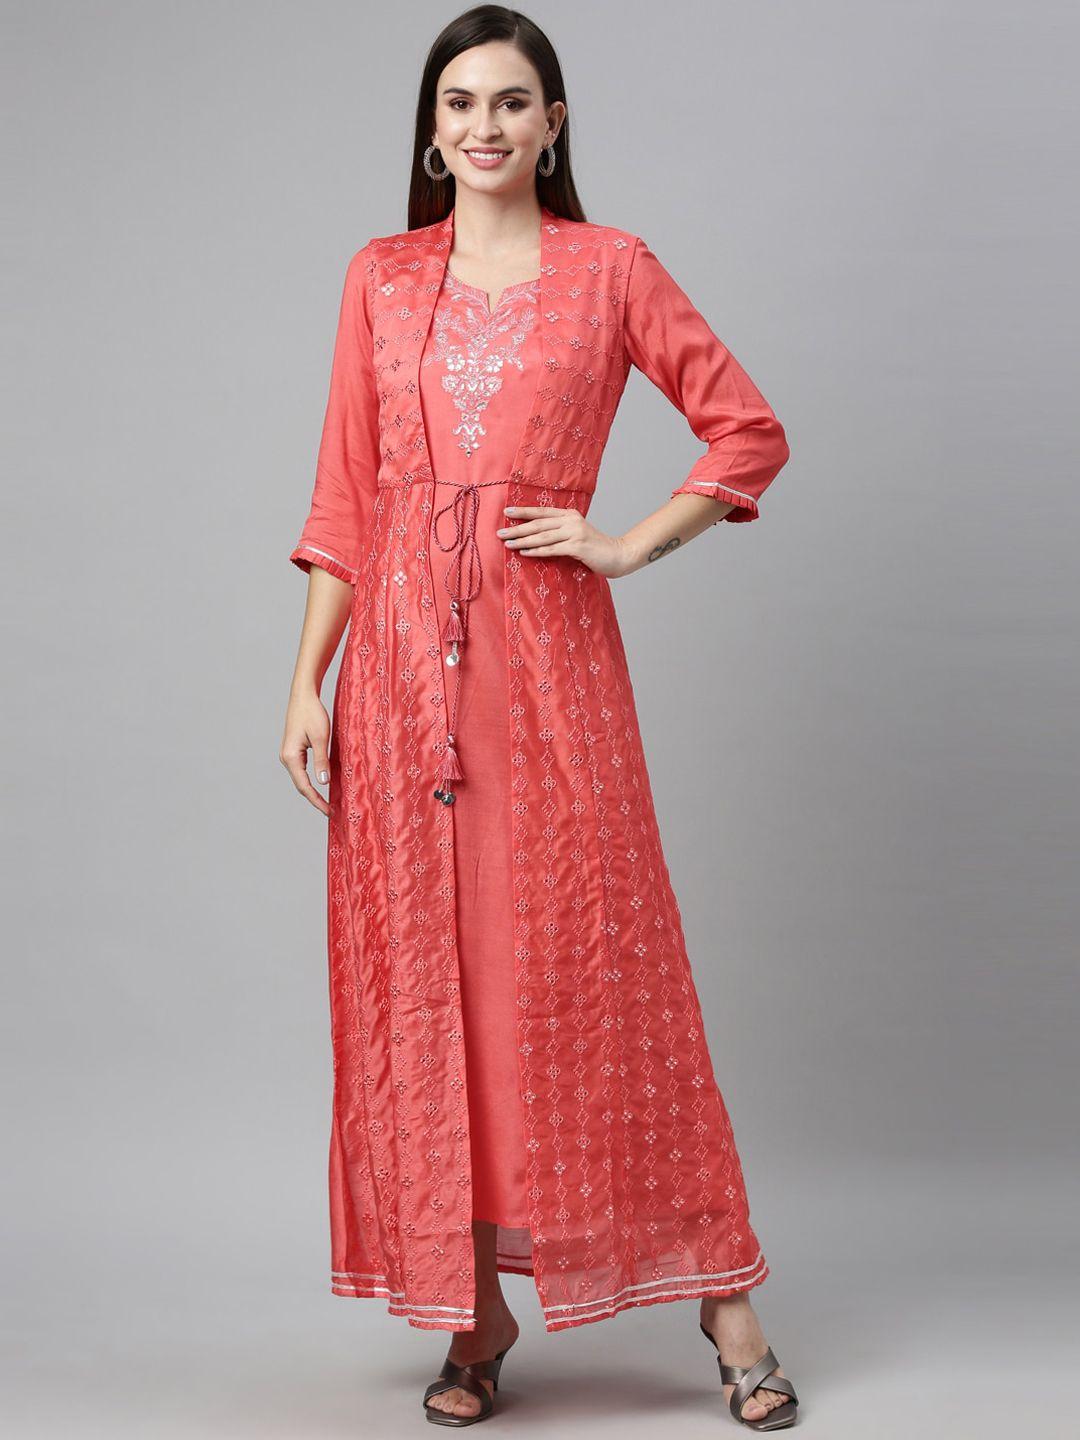 neerus pink ethnic maxi dress with jacket